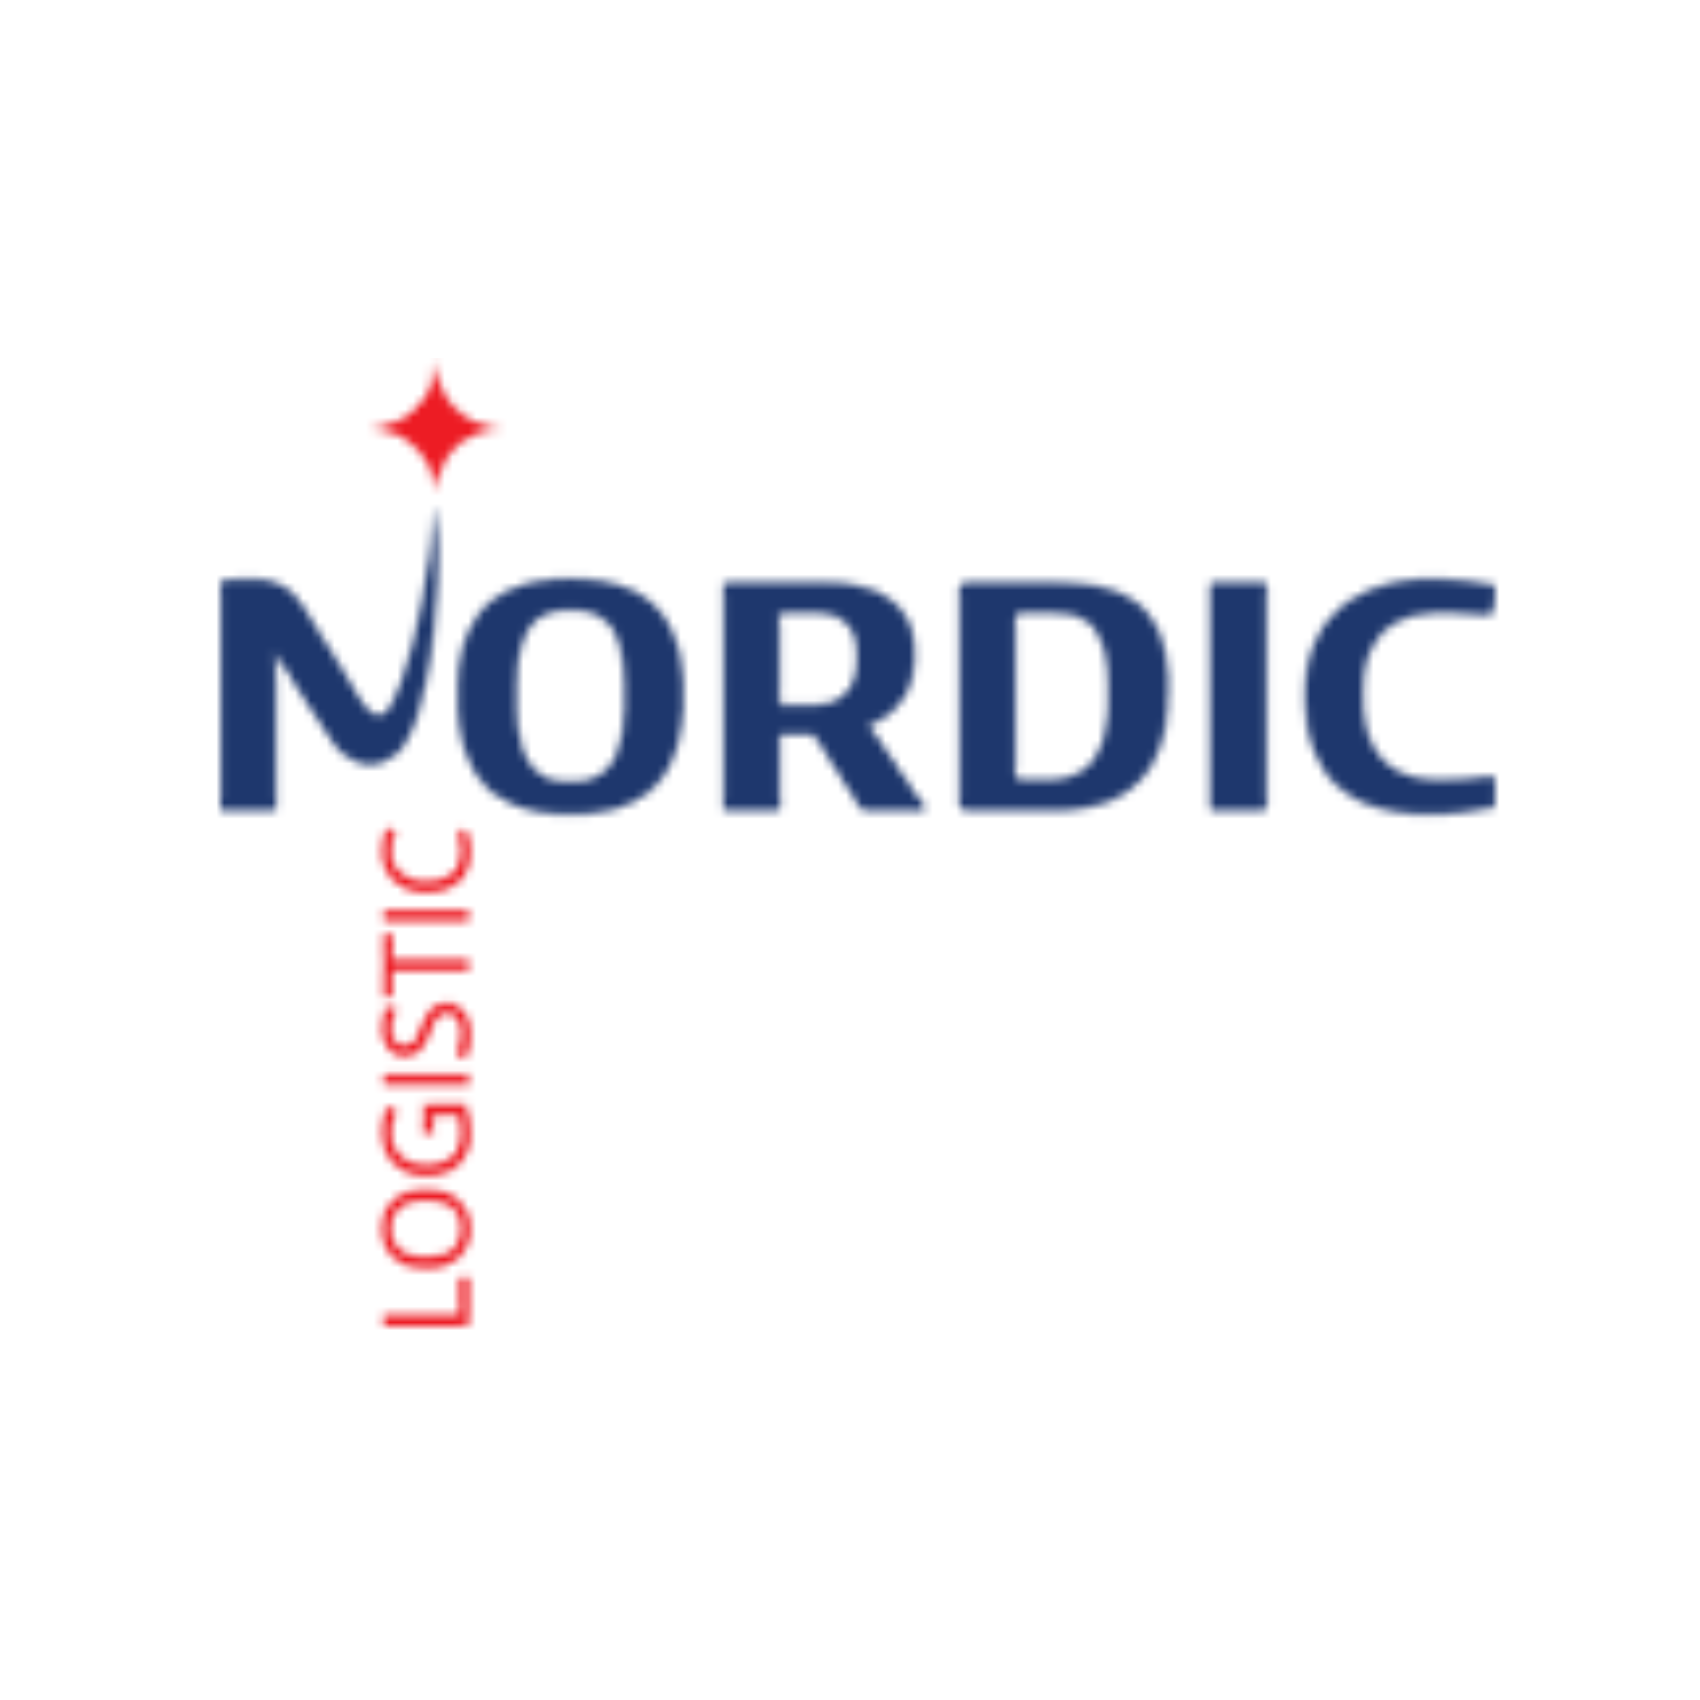 Nordic Logistic